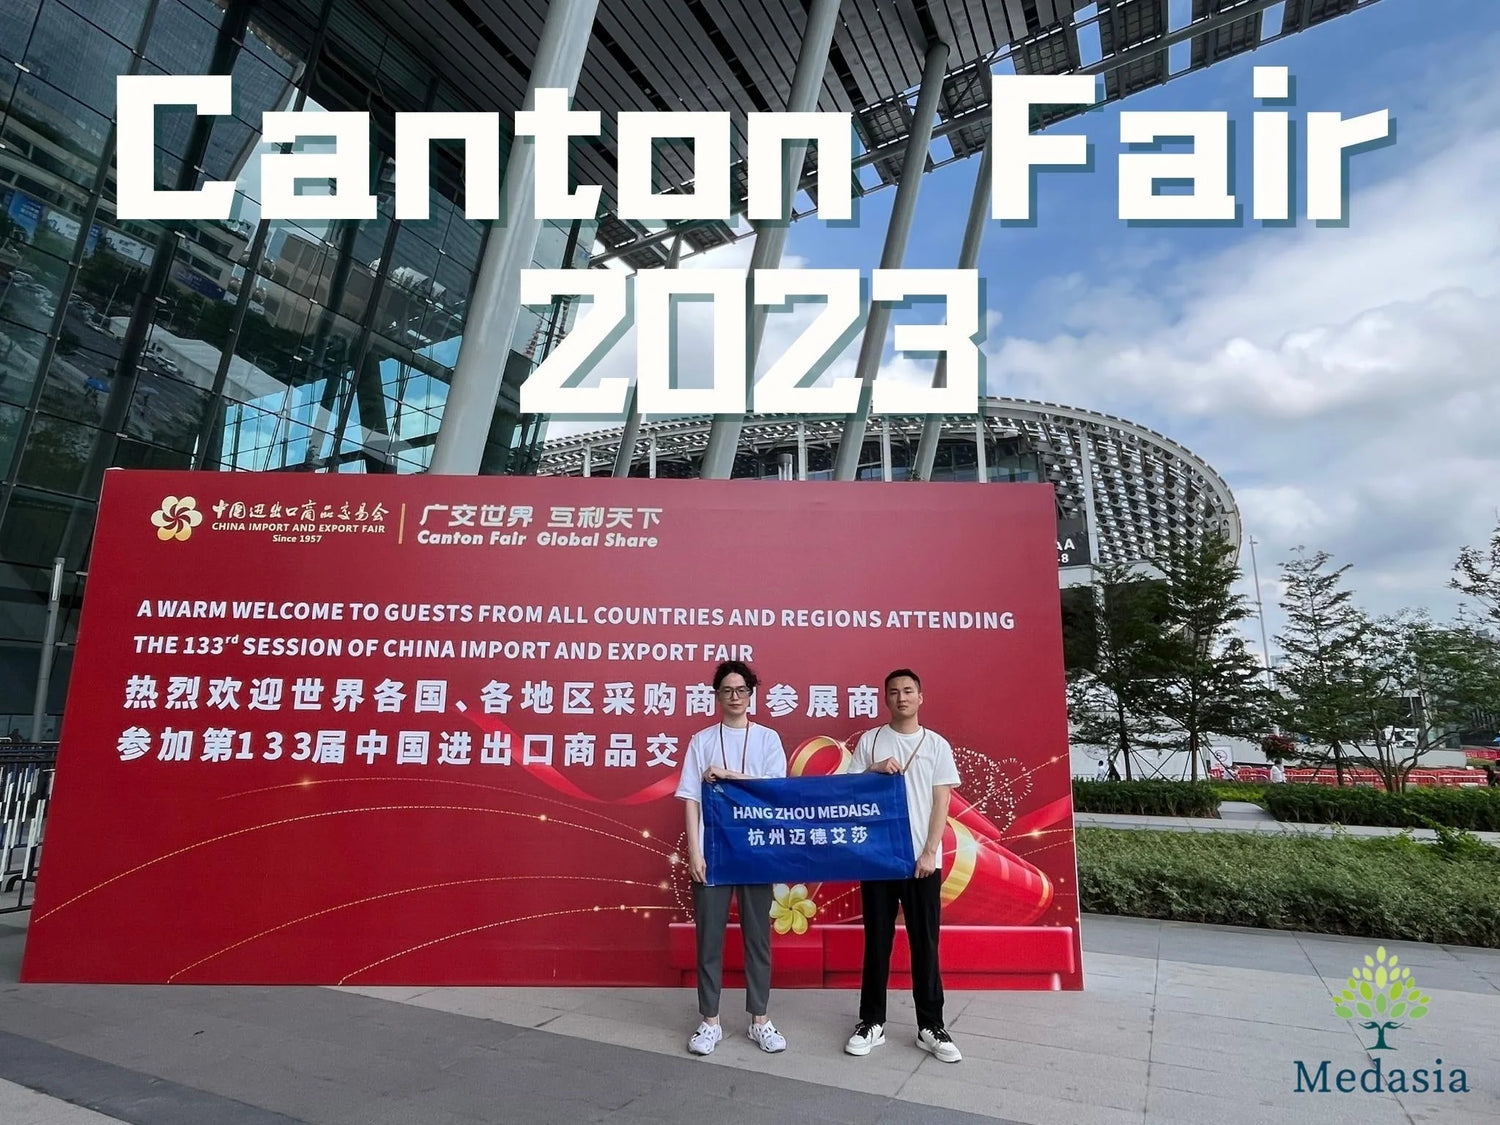 MedAsia in the Canton Fair 2023